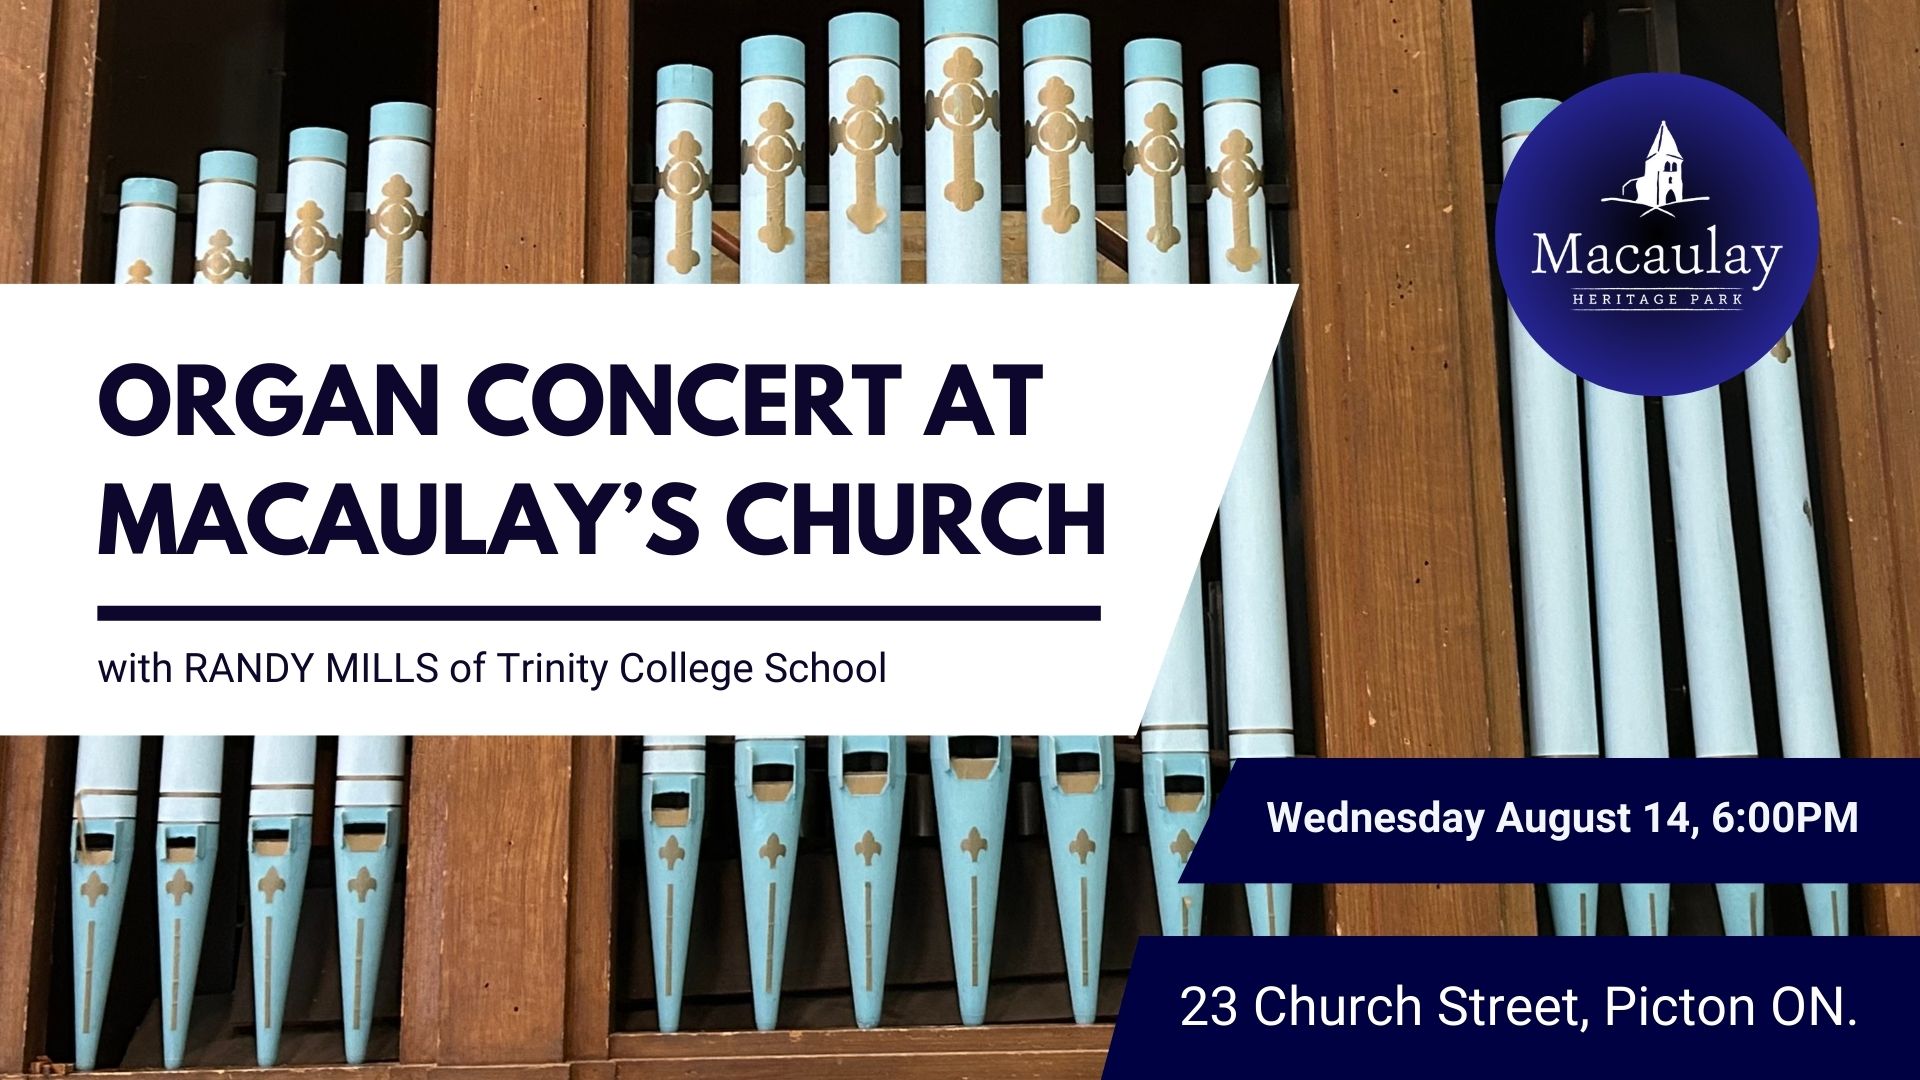 Organ Concert at Macaulay's Church with Randy Mills of Trinity College School